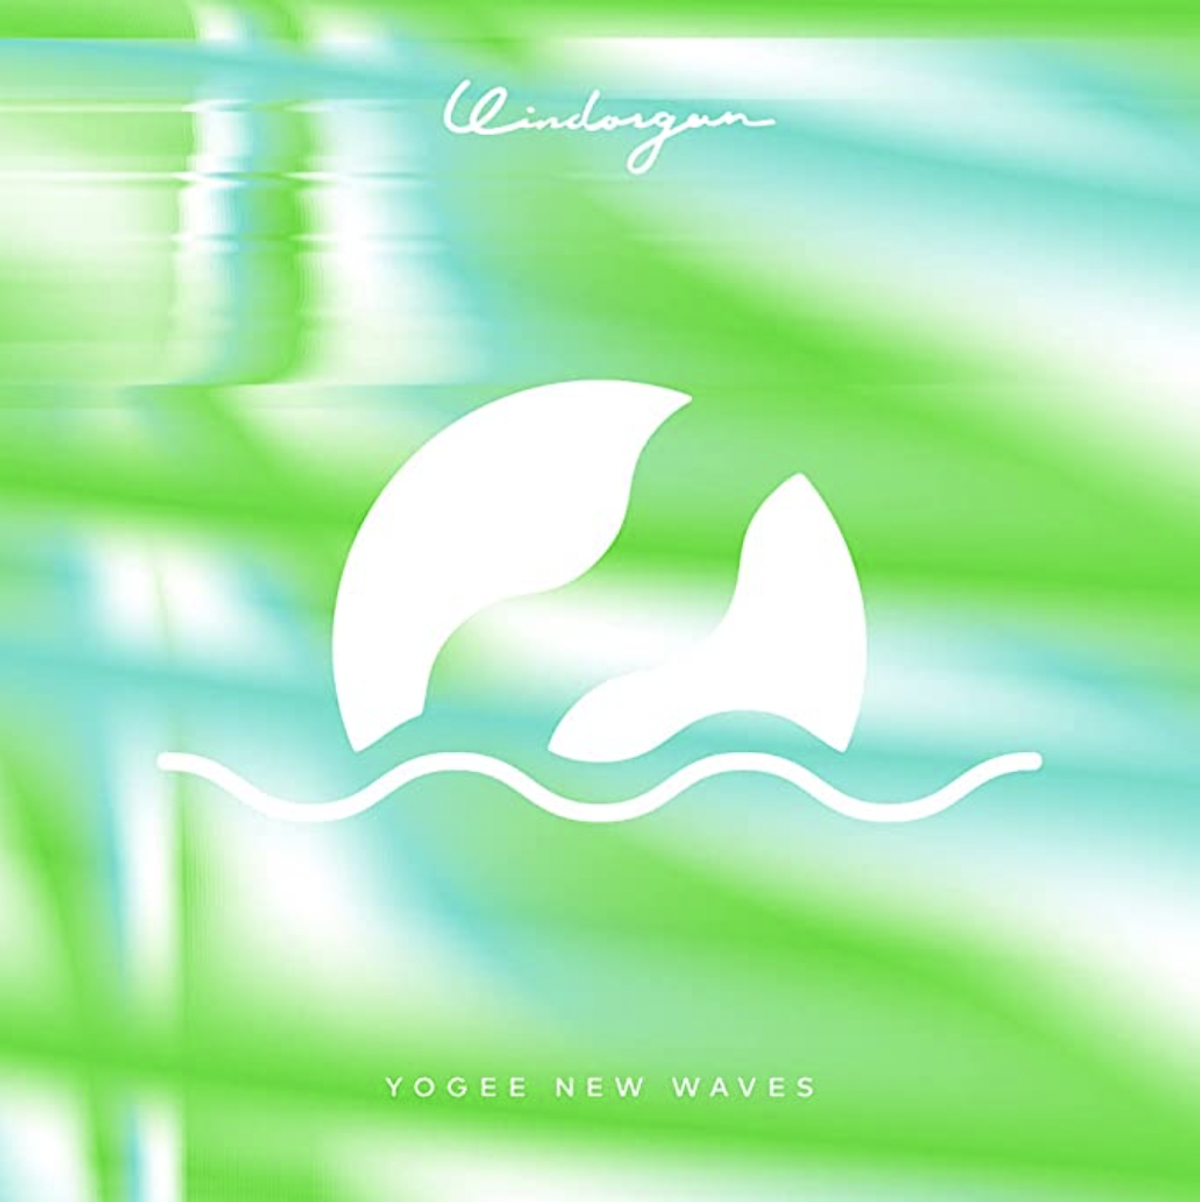 YOGEE NEW WAVES「WINDORGAN」